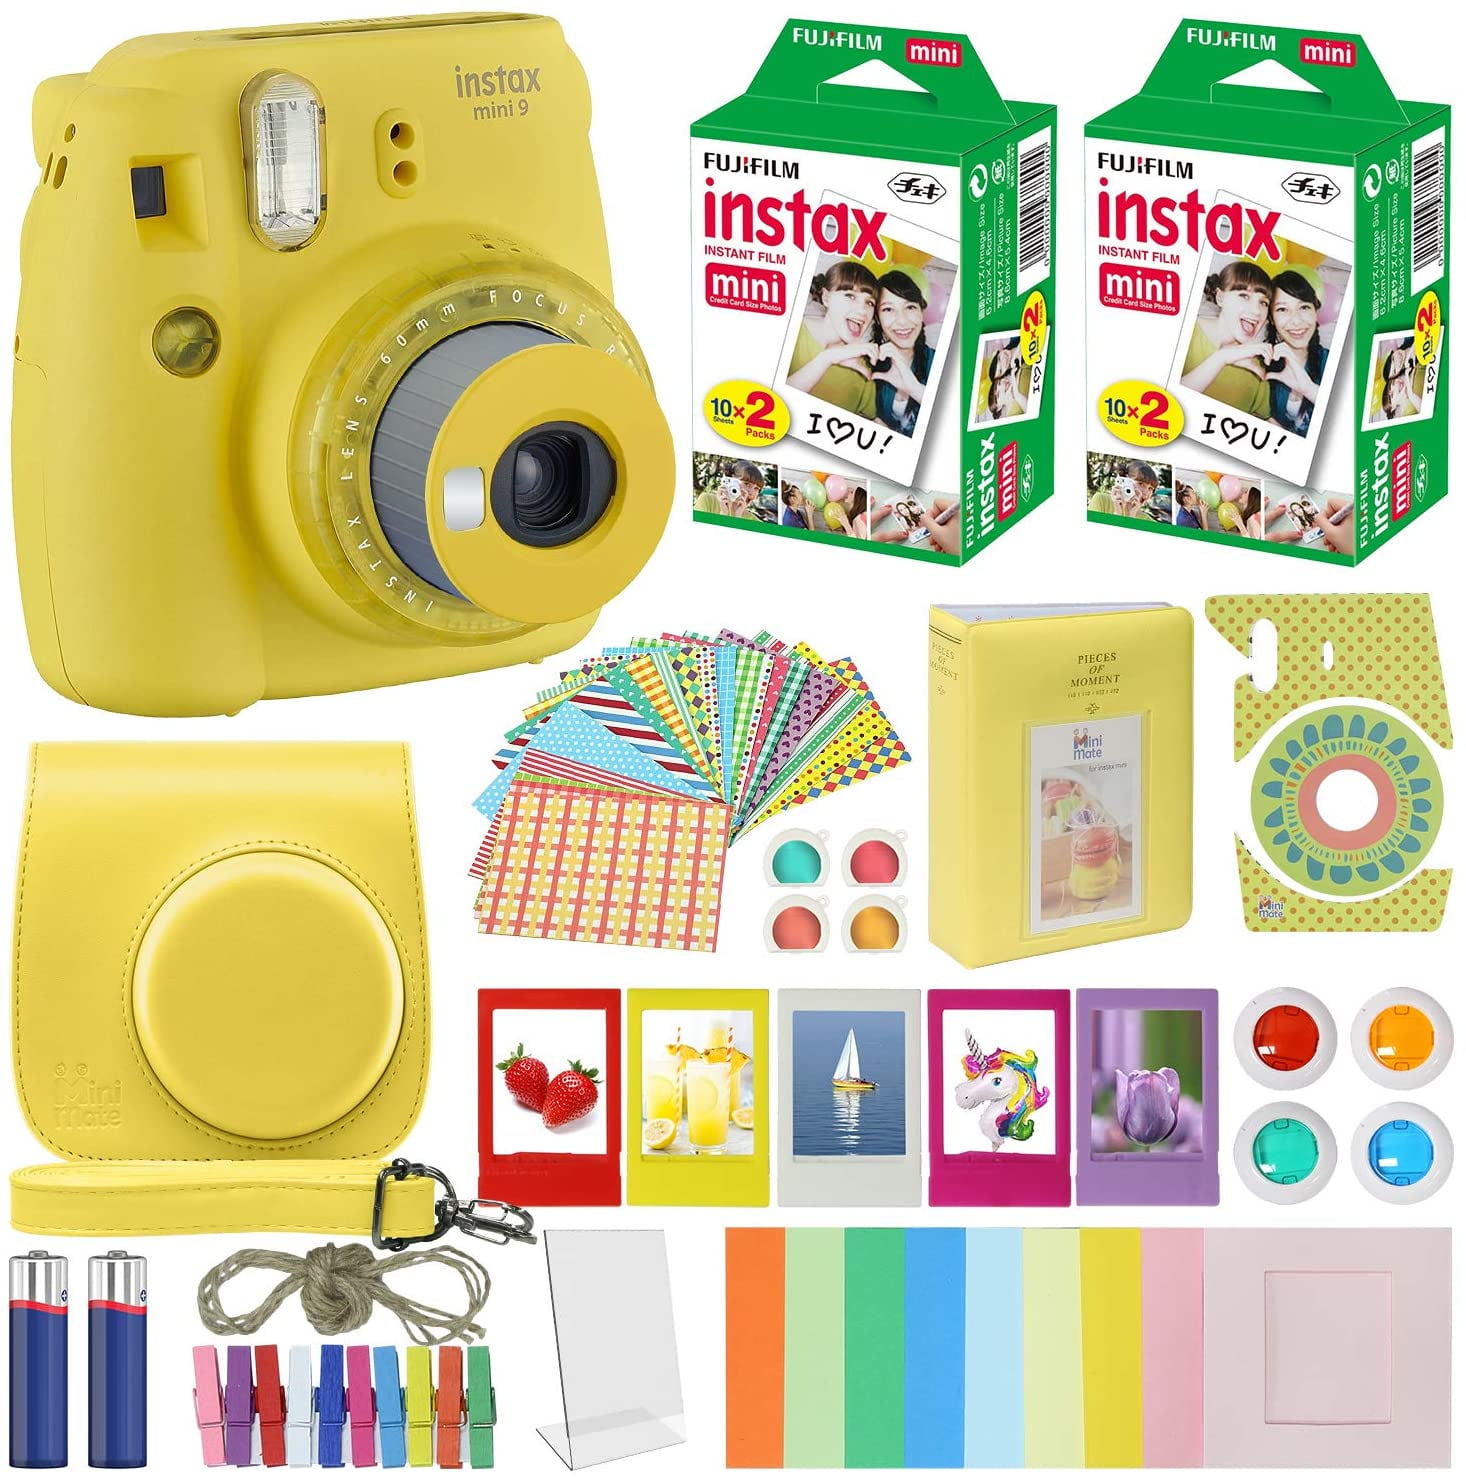 Slijm zo modder Fujifilm Instax Mini 9 Fuji Instant Film Camera Lime Green + Yellow Case  +40 Film Deluxe Bundle - Walmart.com